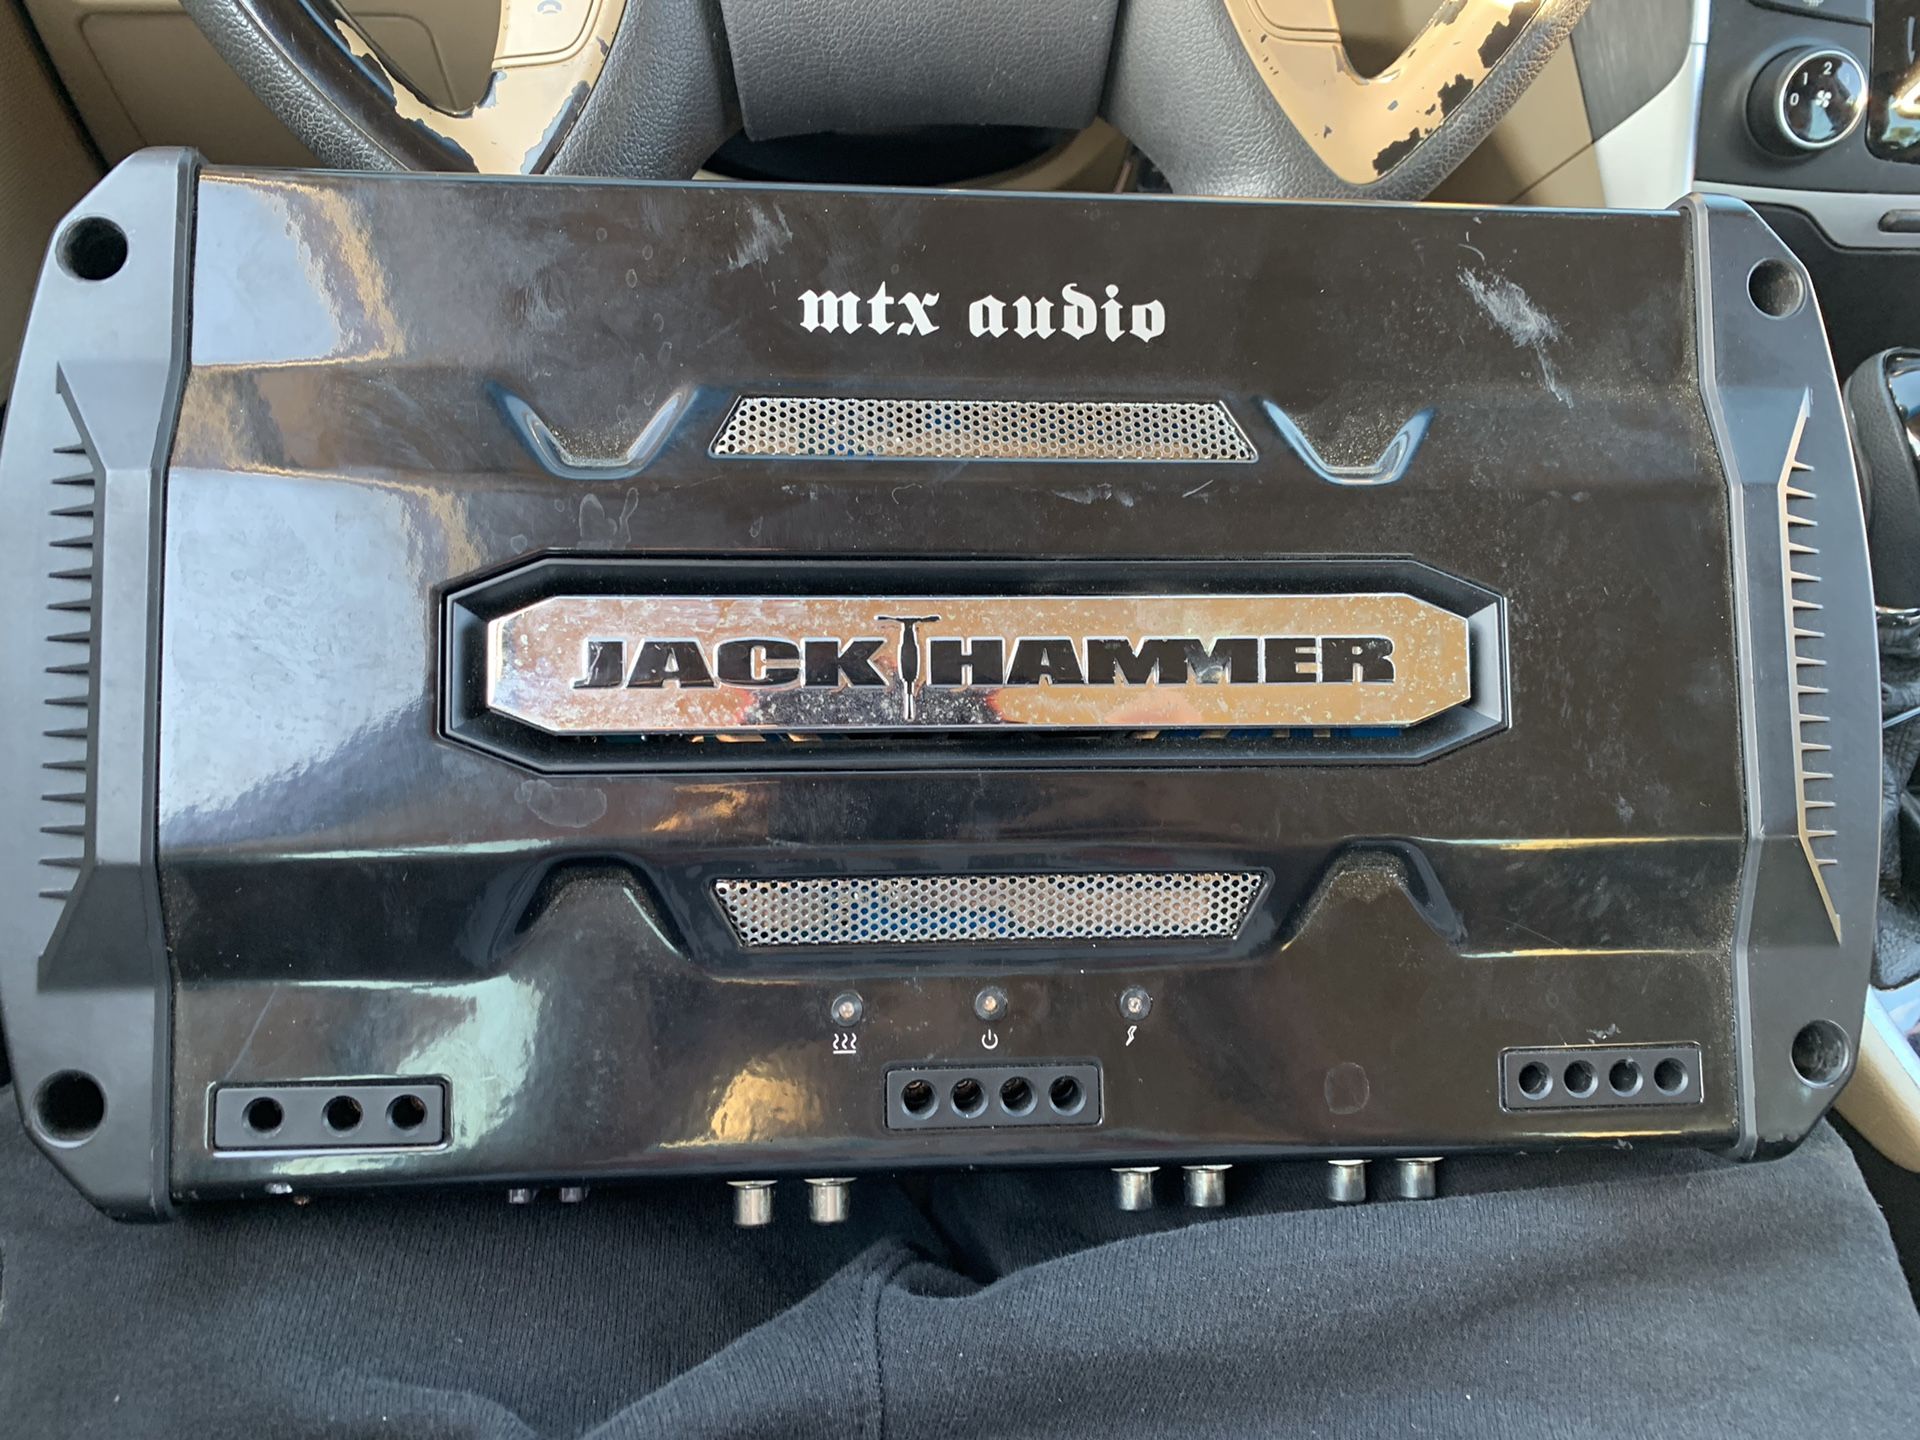 MTX audio Jack Hammer amp